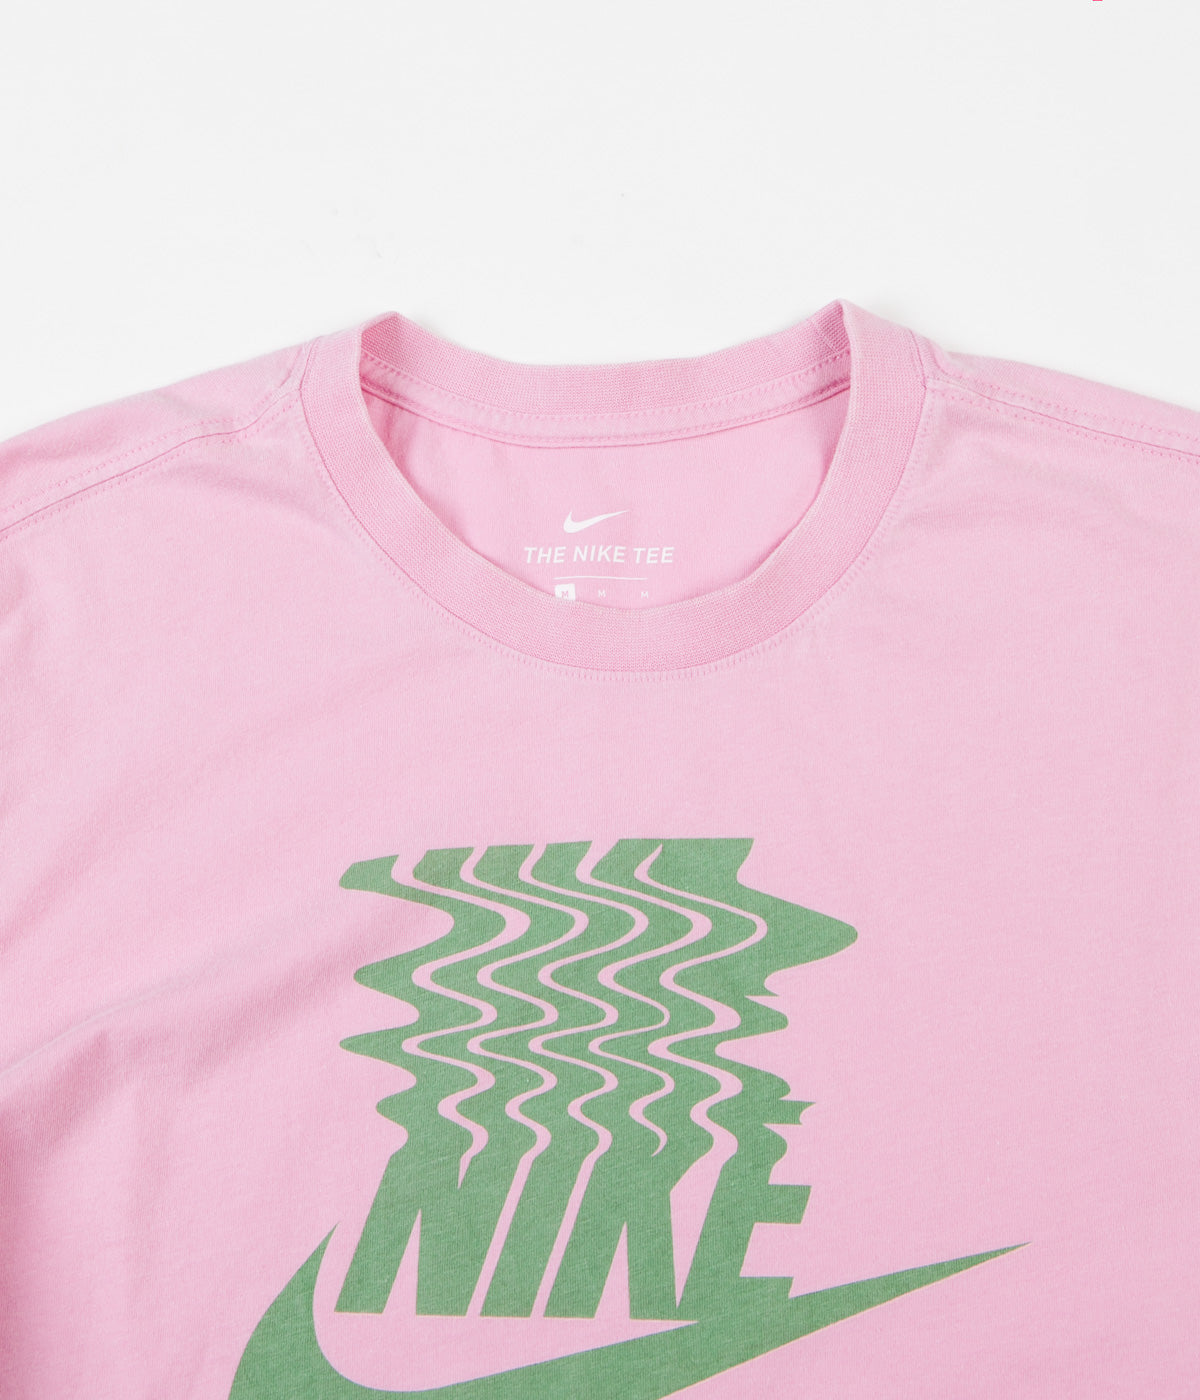 green and pink nike shirt